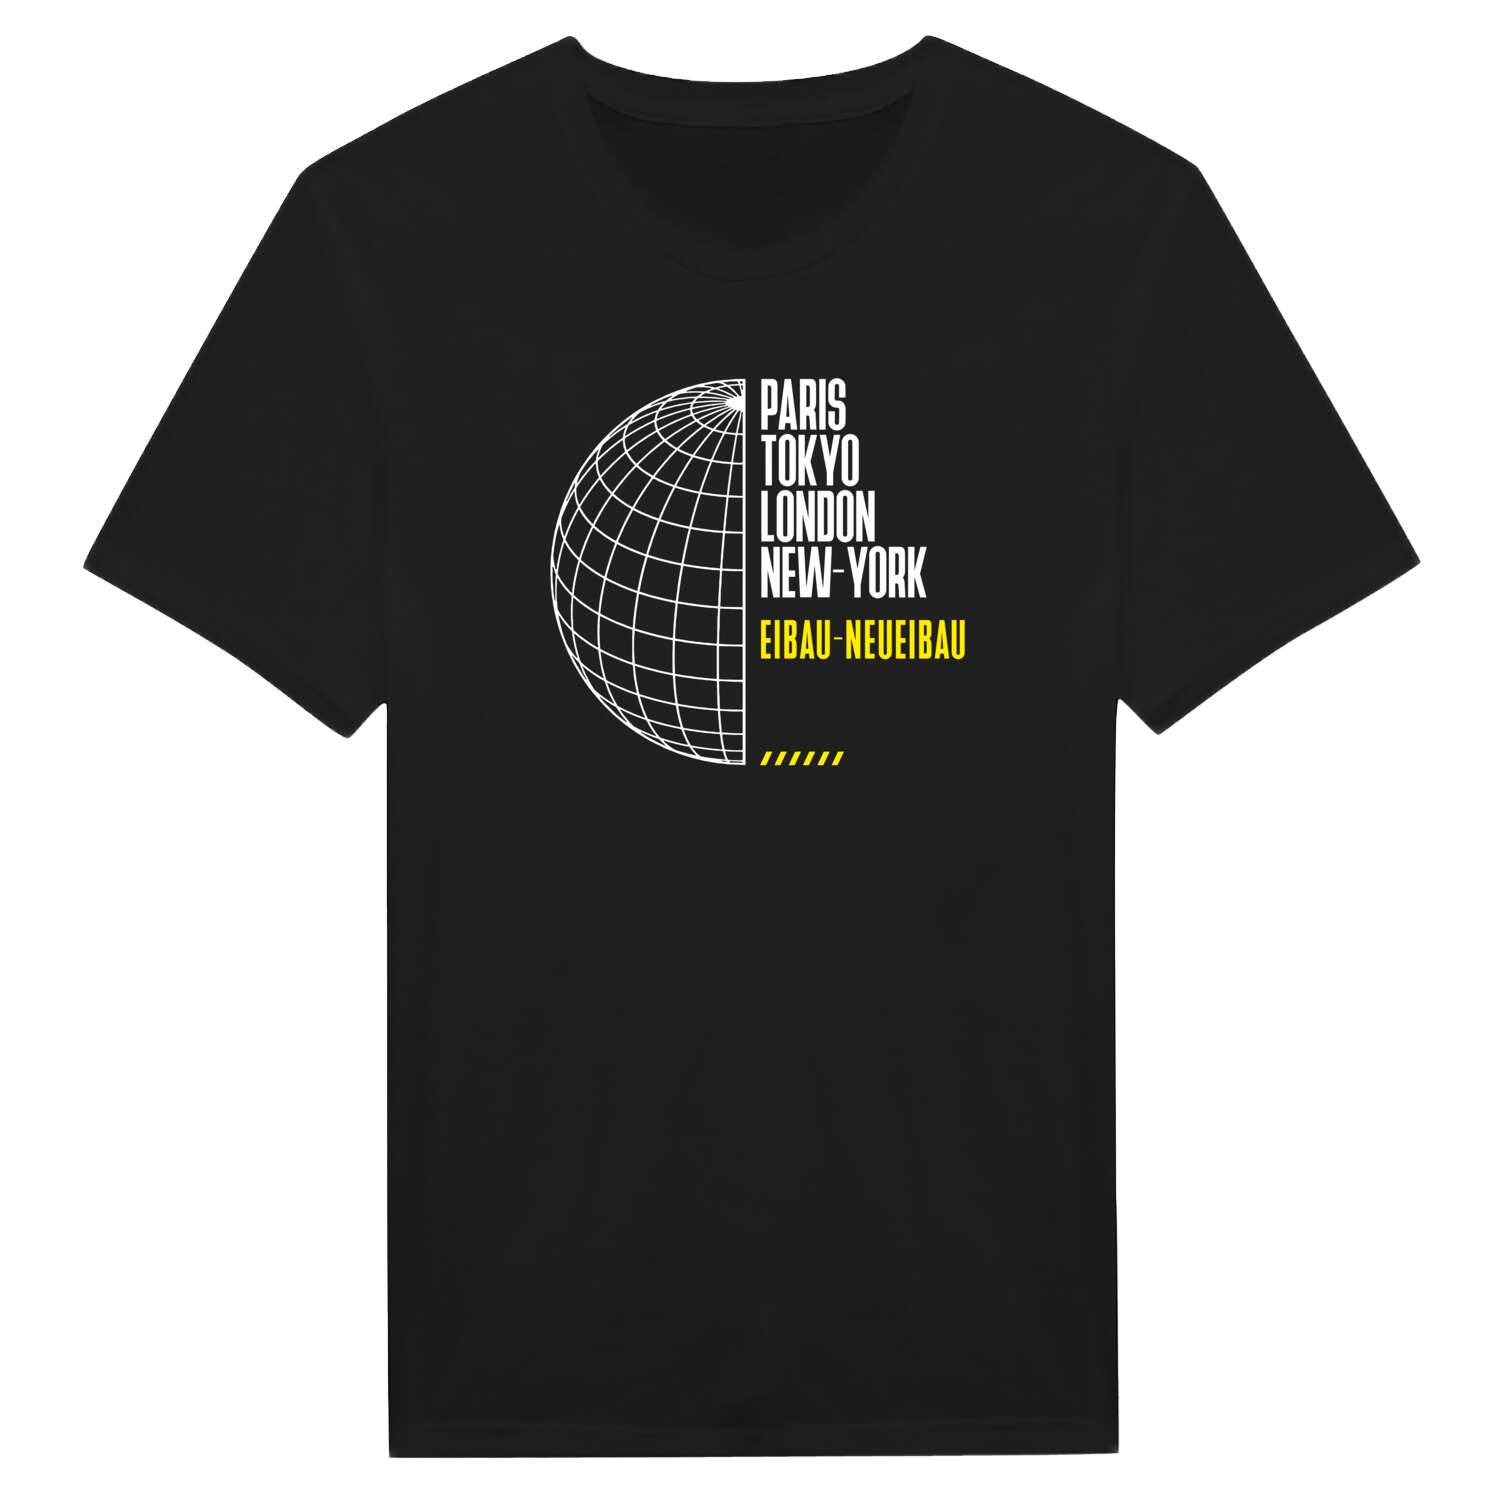 Eibau-Neueibau T-Shirt »Paris Tokyo London«